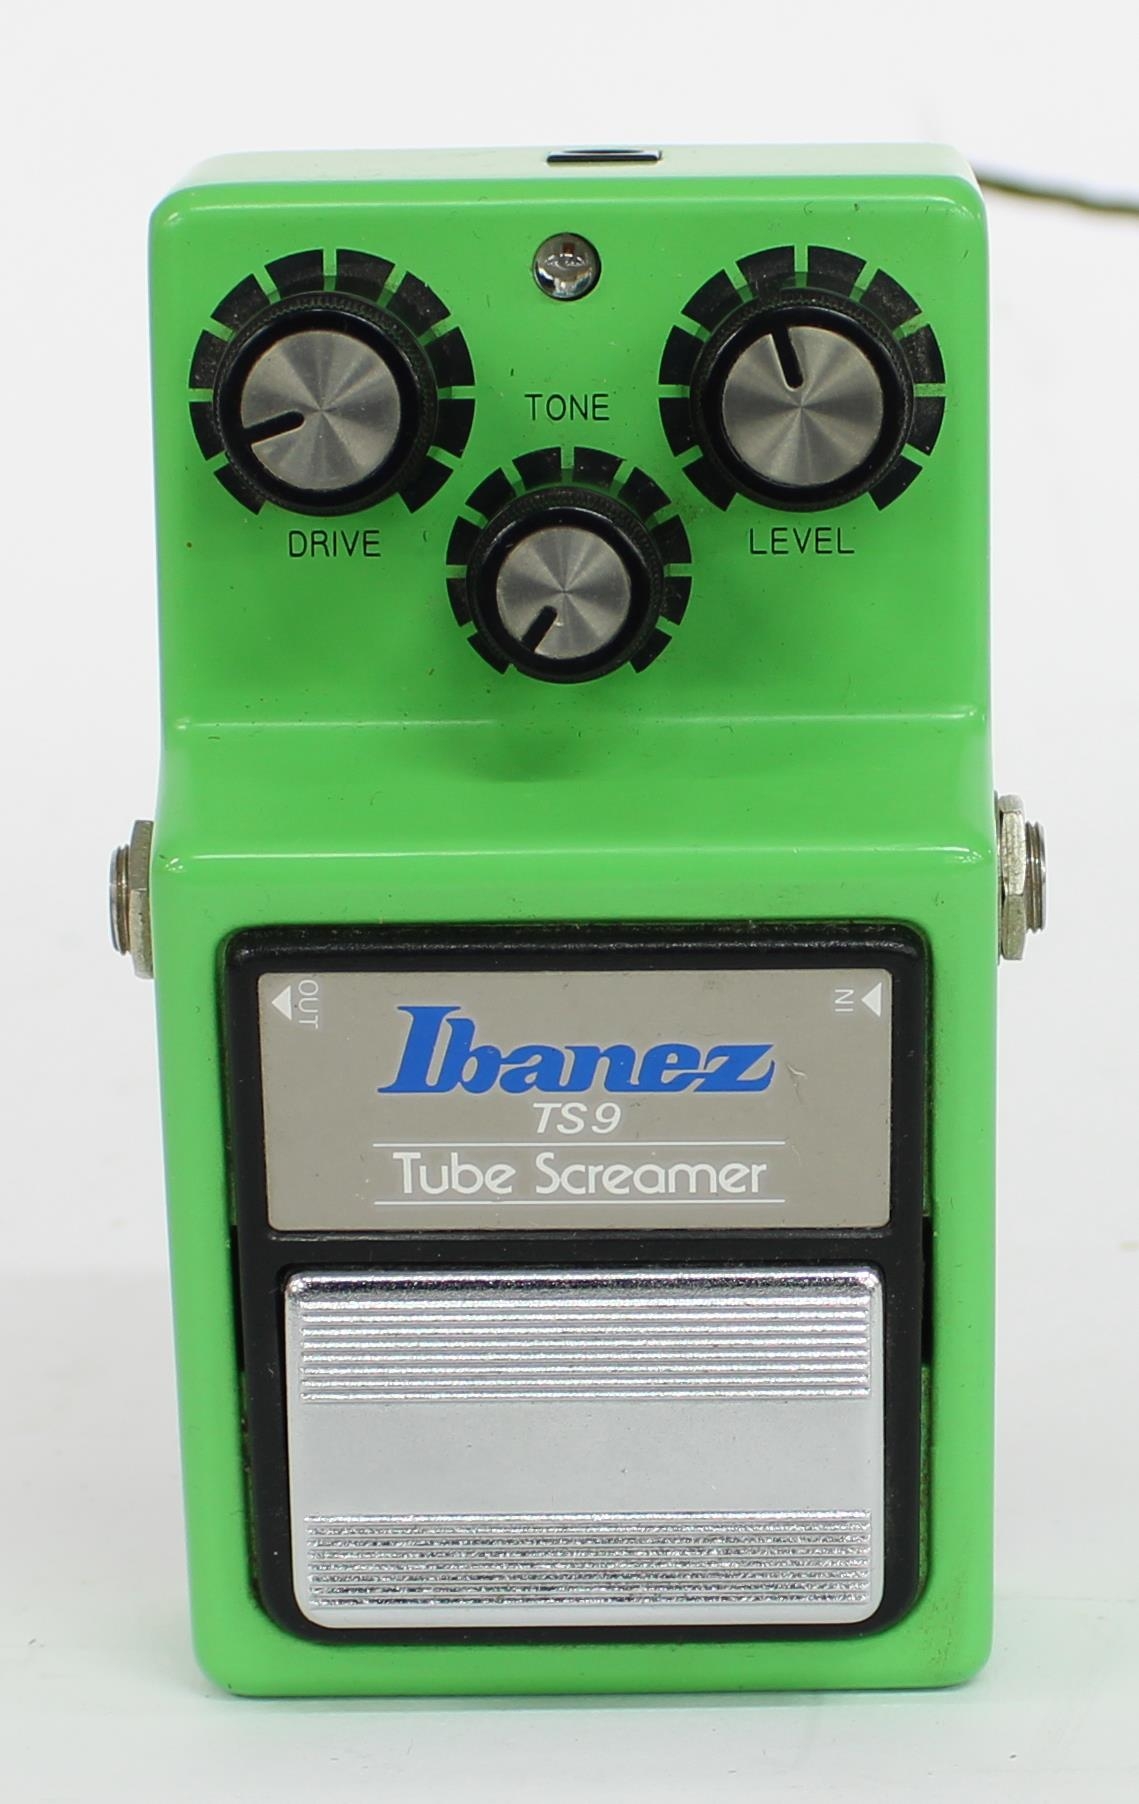 Ibanez TS9 Tube Screamer guitar pedal, made in Japan, ser. no. 185035